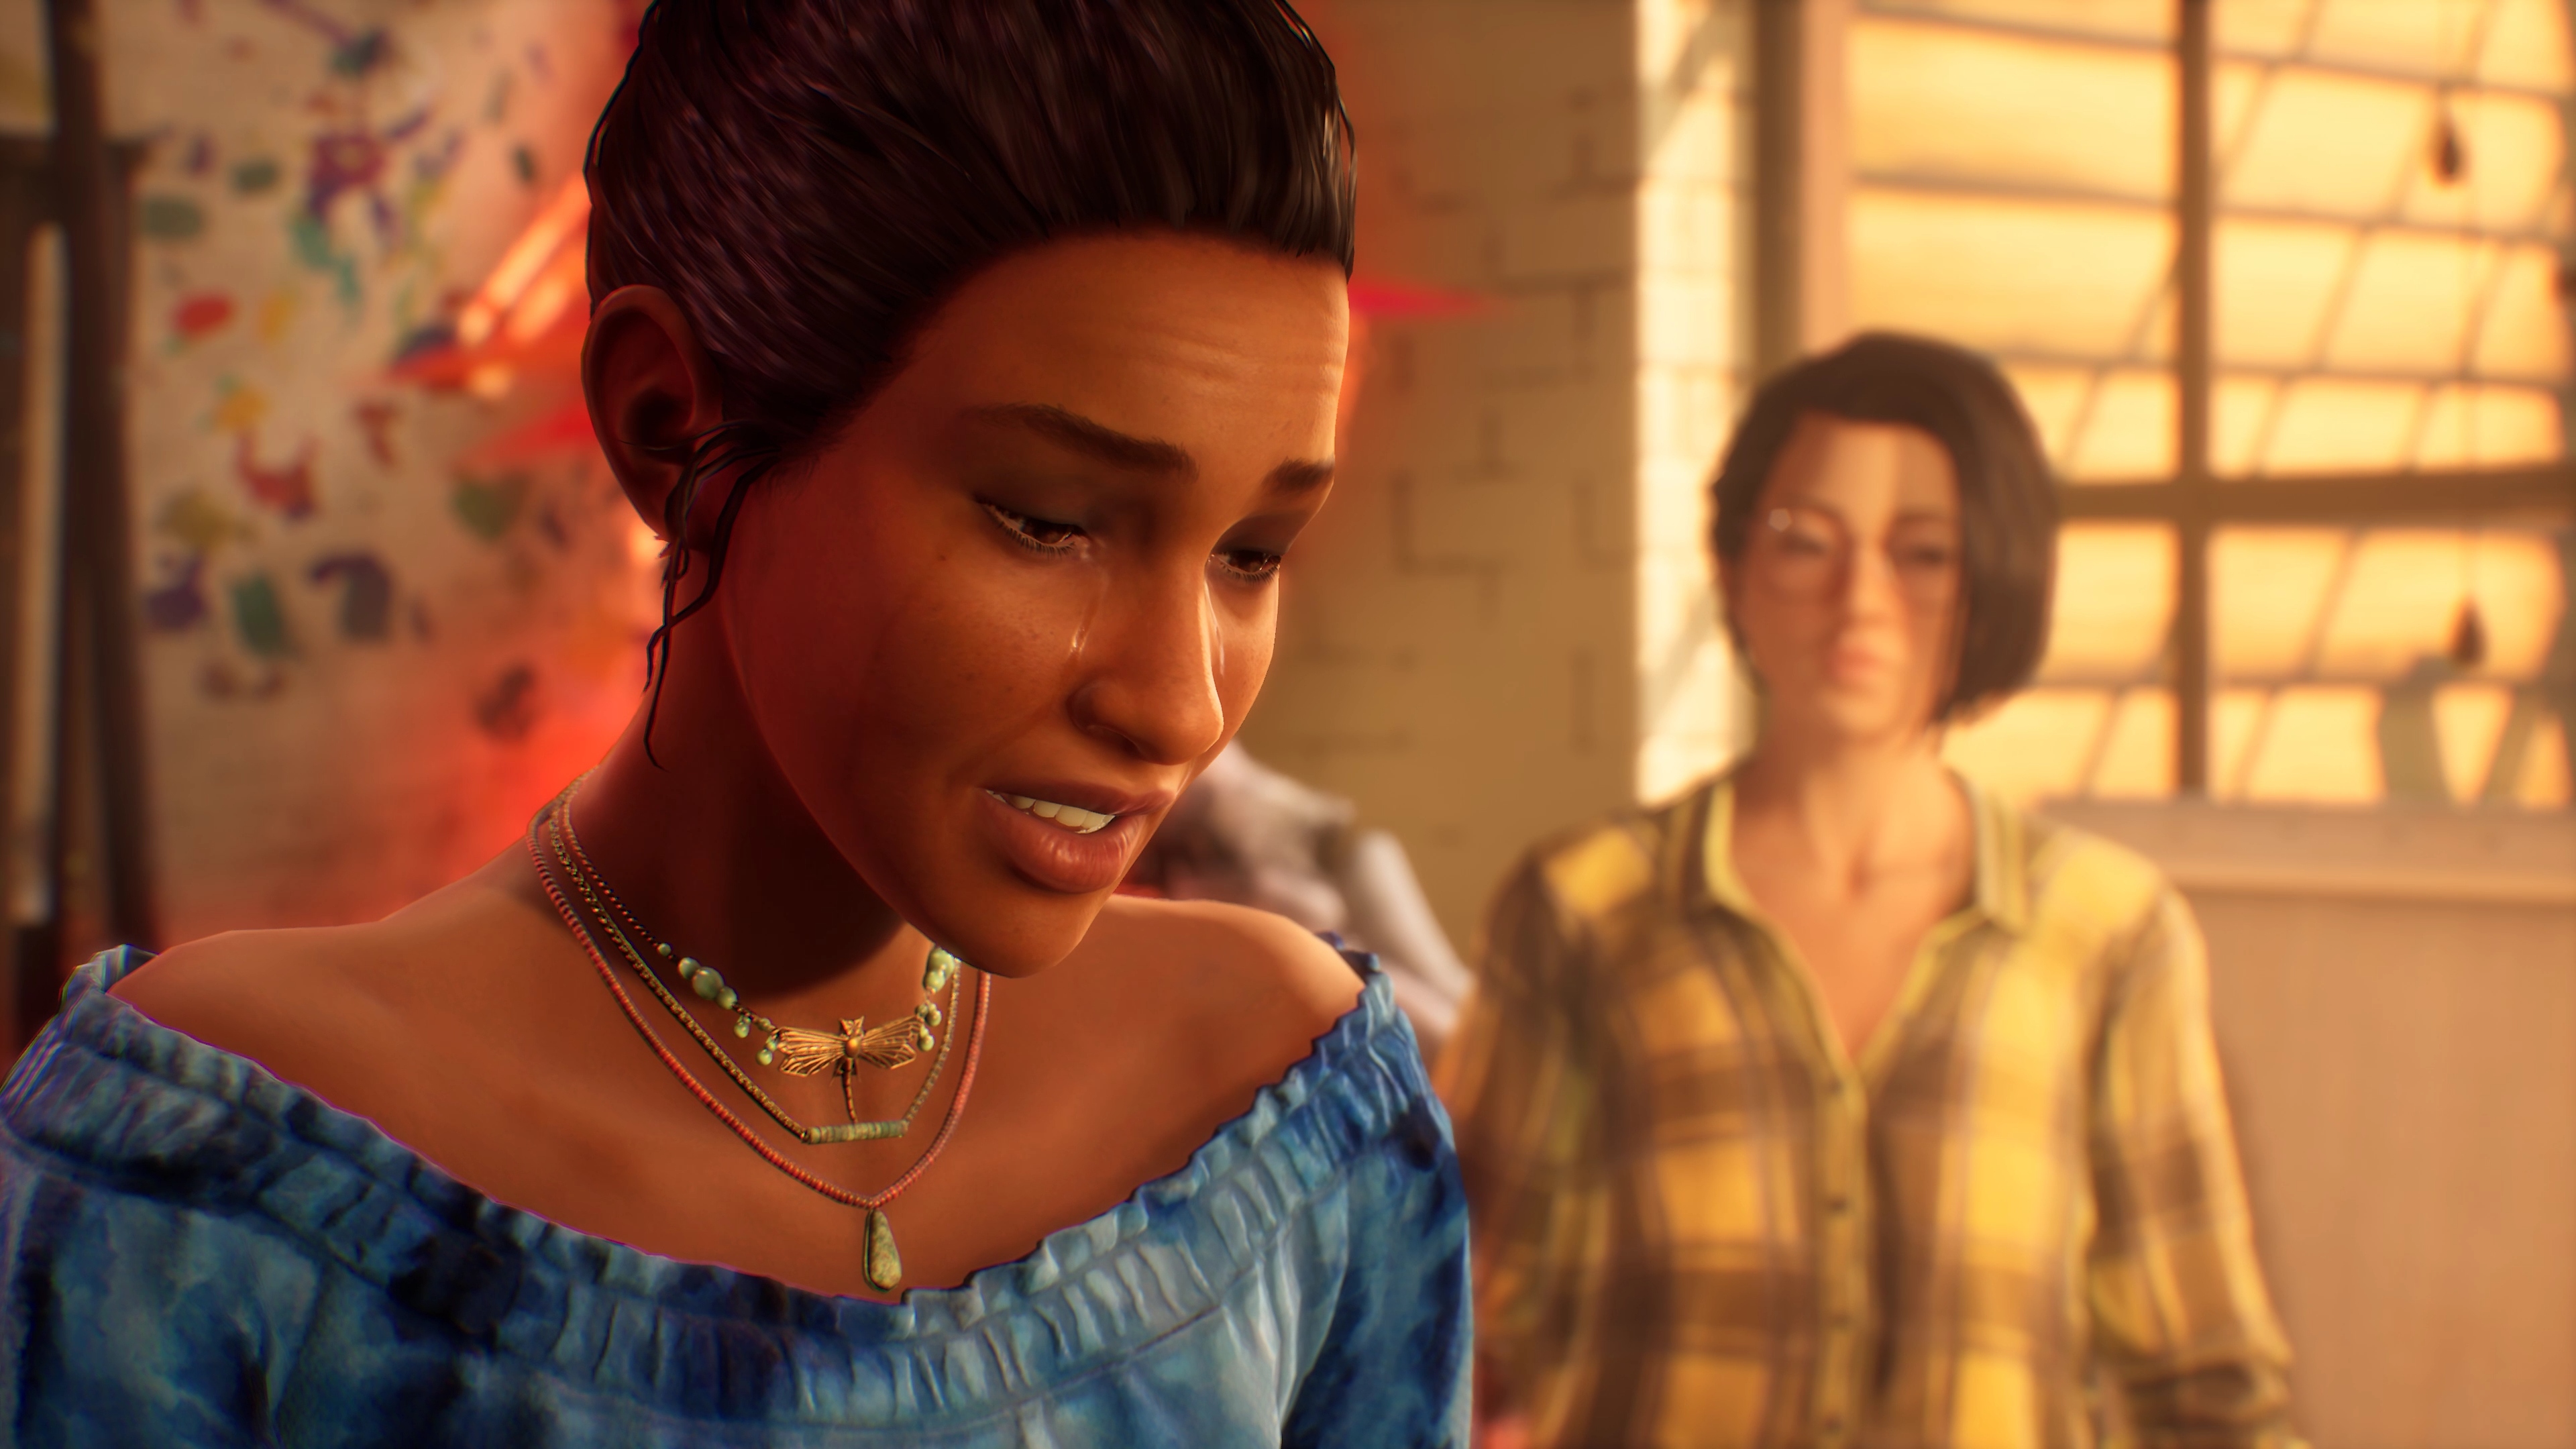 《Life is Strange True Colors》的屏幕截图，显示 Alex 与一名正在哭泣的人物交谈